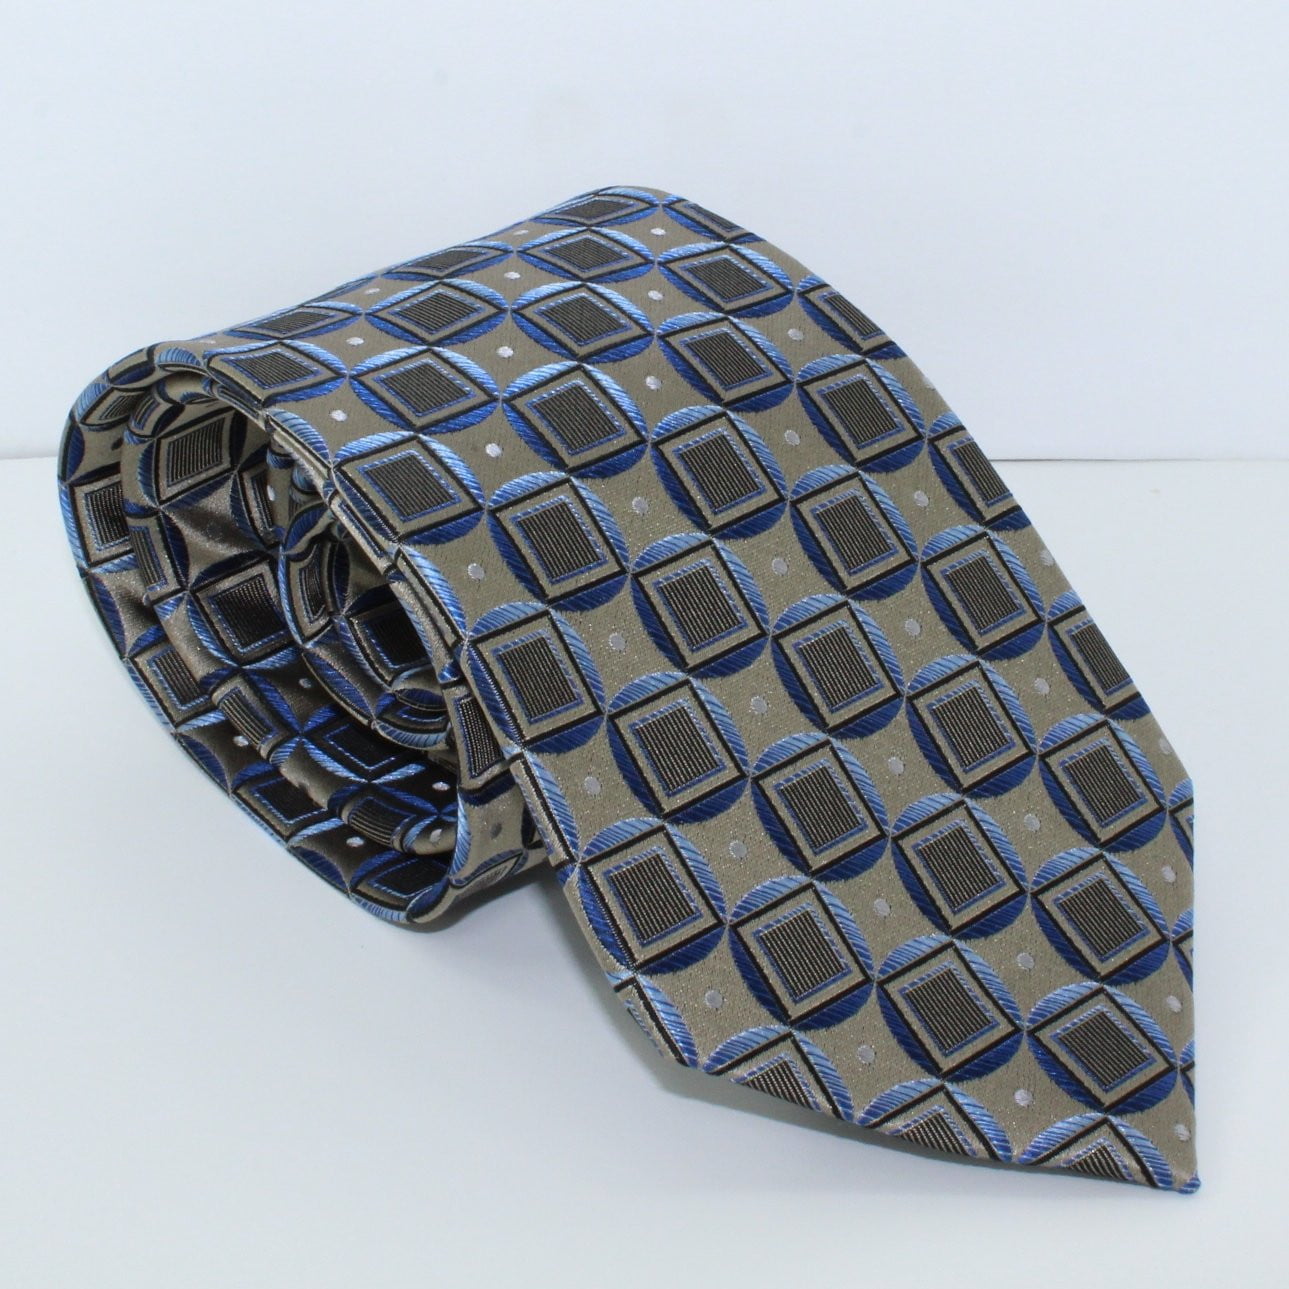 Platinum Designs Stainless Steel Blue Silk Tie - Stunning Geometric modernistic beauty